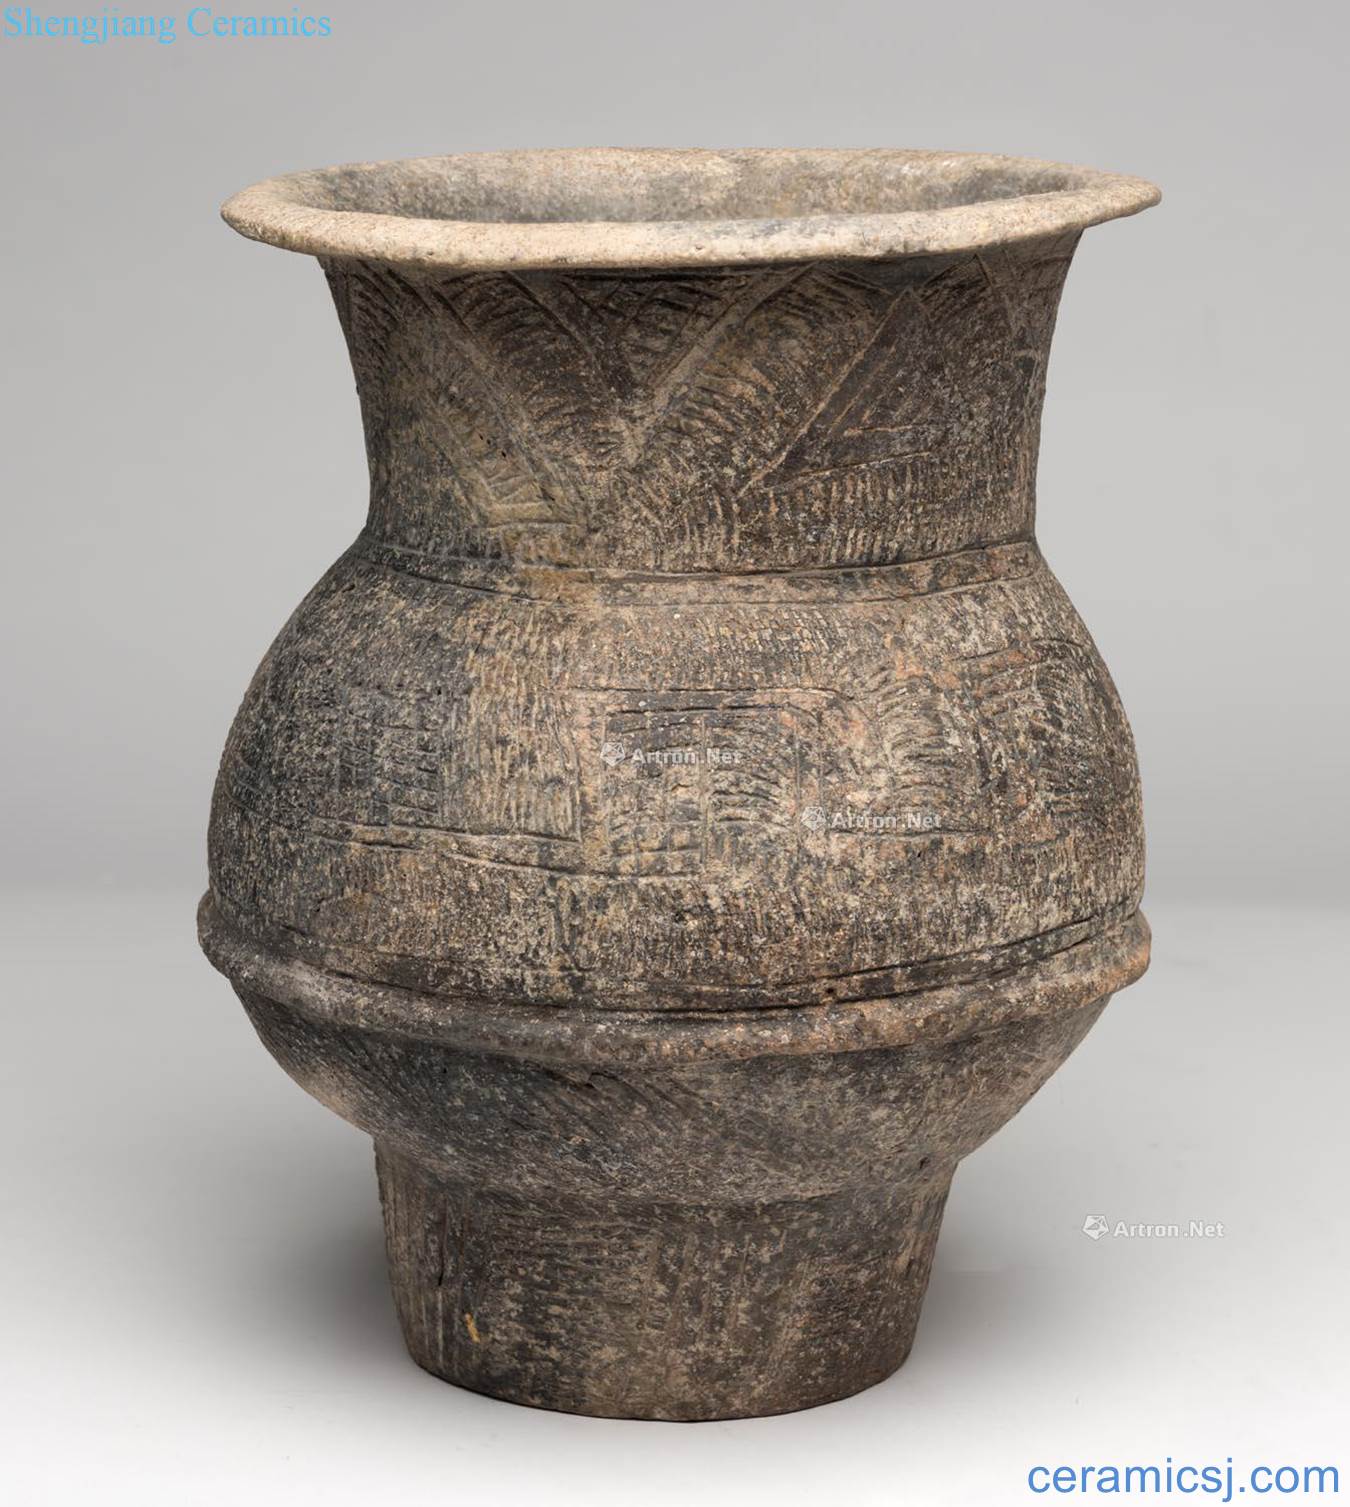 The north of Thailand In 100 BC Prehistoric ceramic POTS